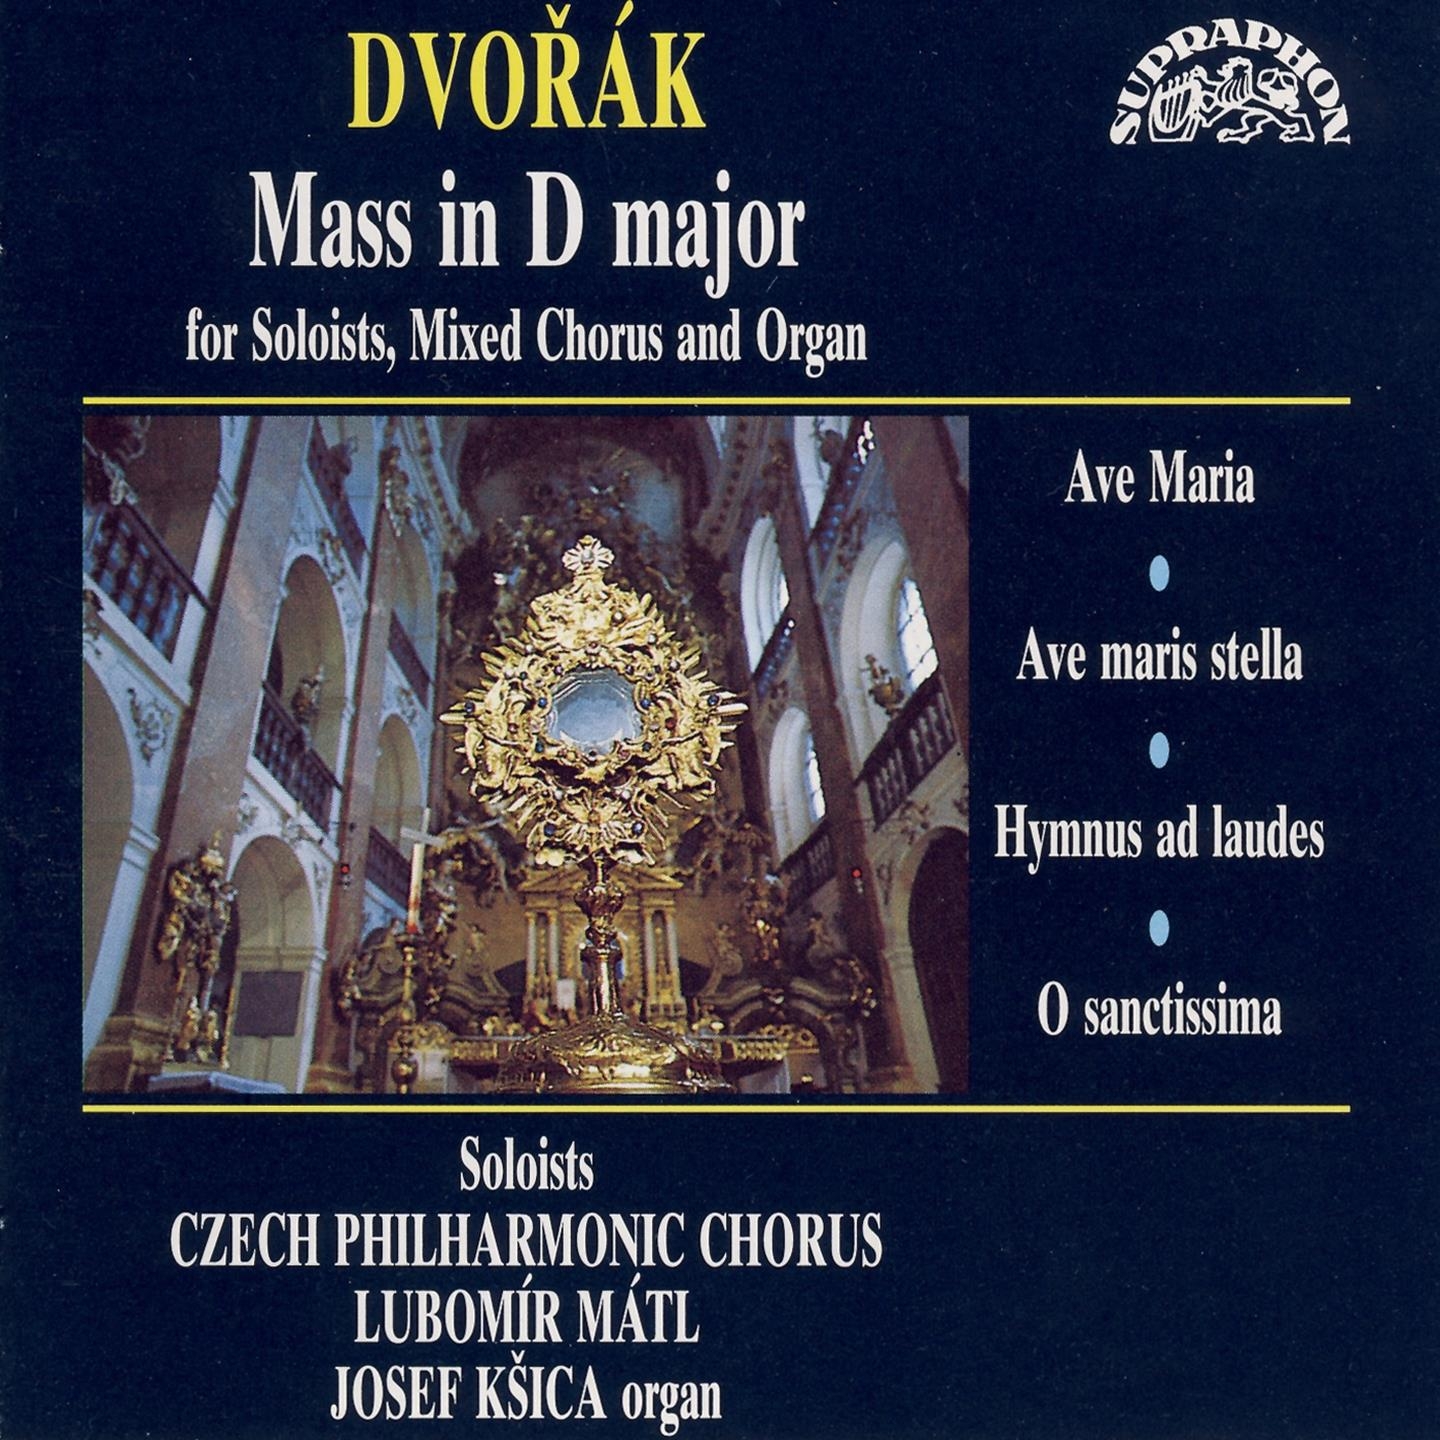 Dvoa k: Mass for Solists, Mixed Chorus and Organ